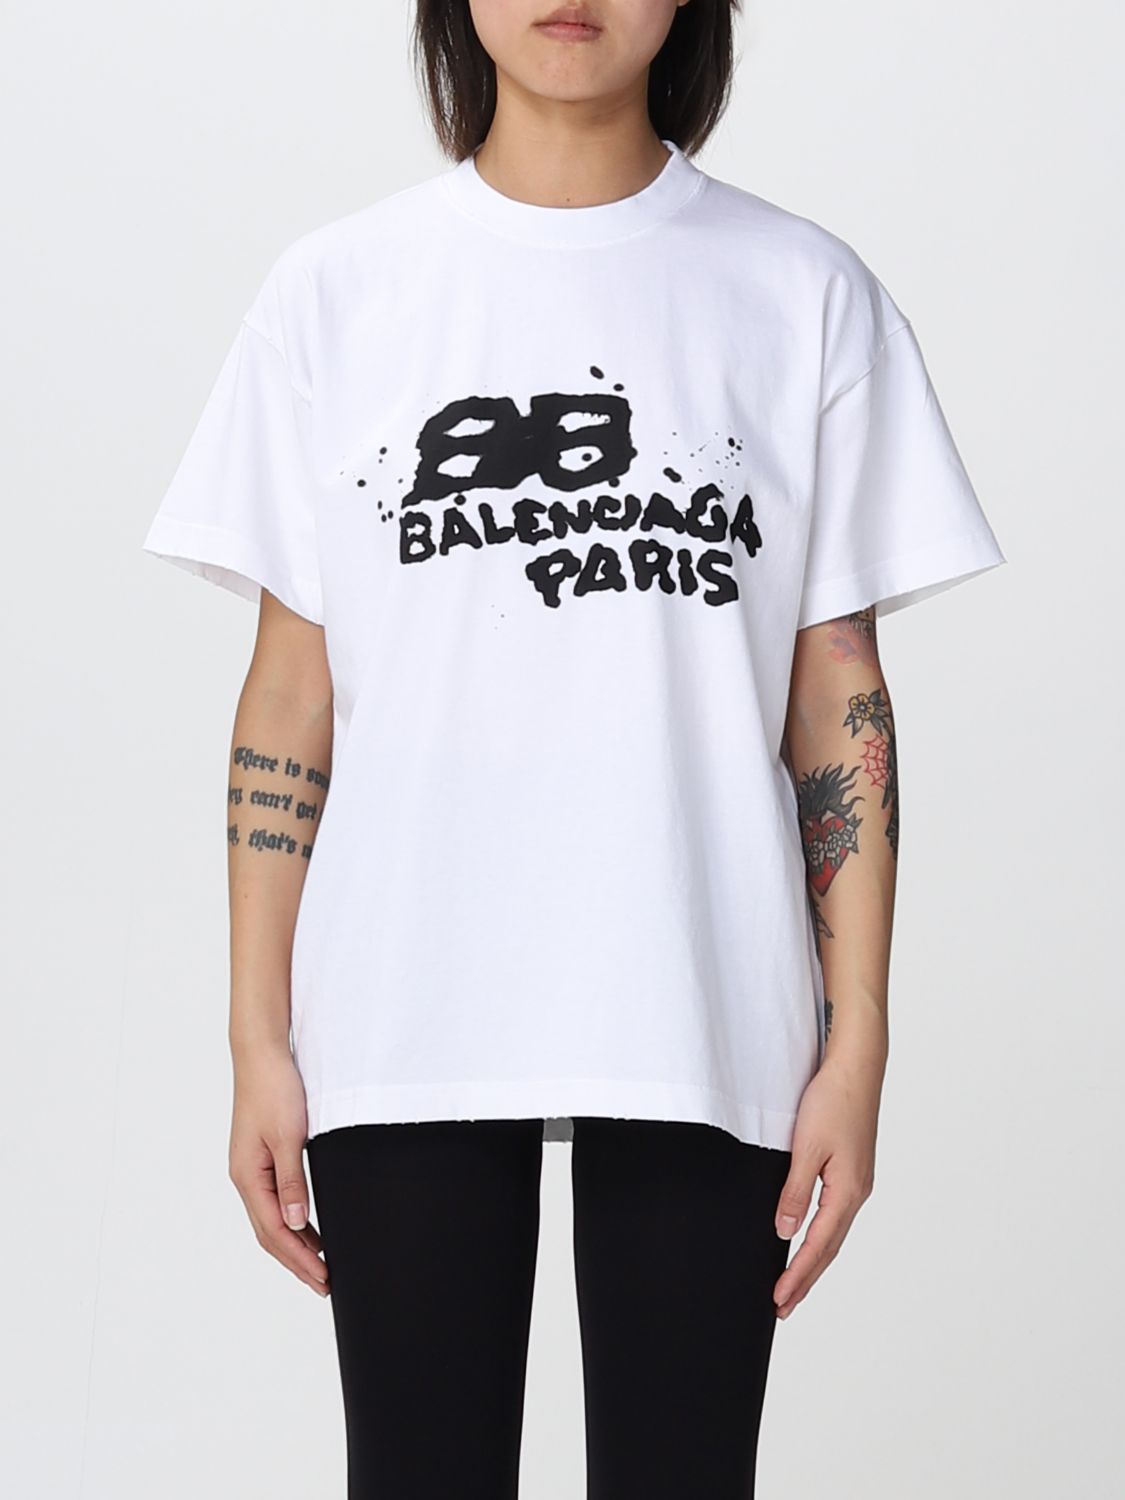 BALENCIAGA: with contrasting graffiti logo - White | Balenciaga t- shirt 612965TNVN4 online at GIGLIO.COM